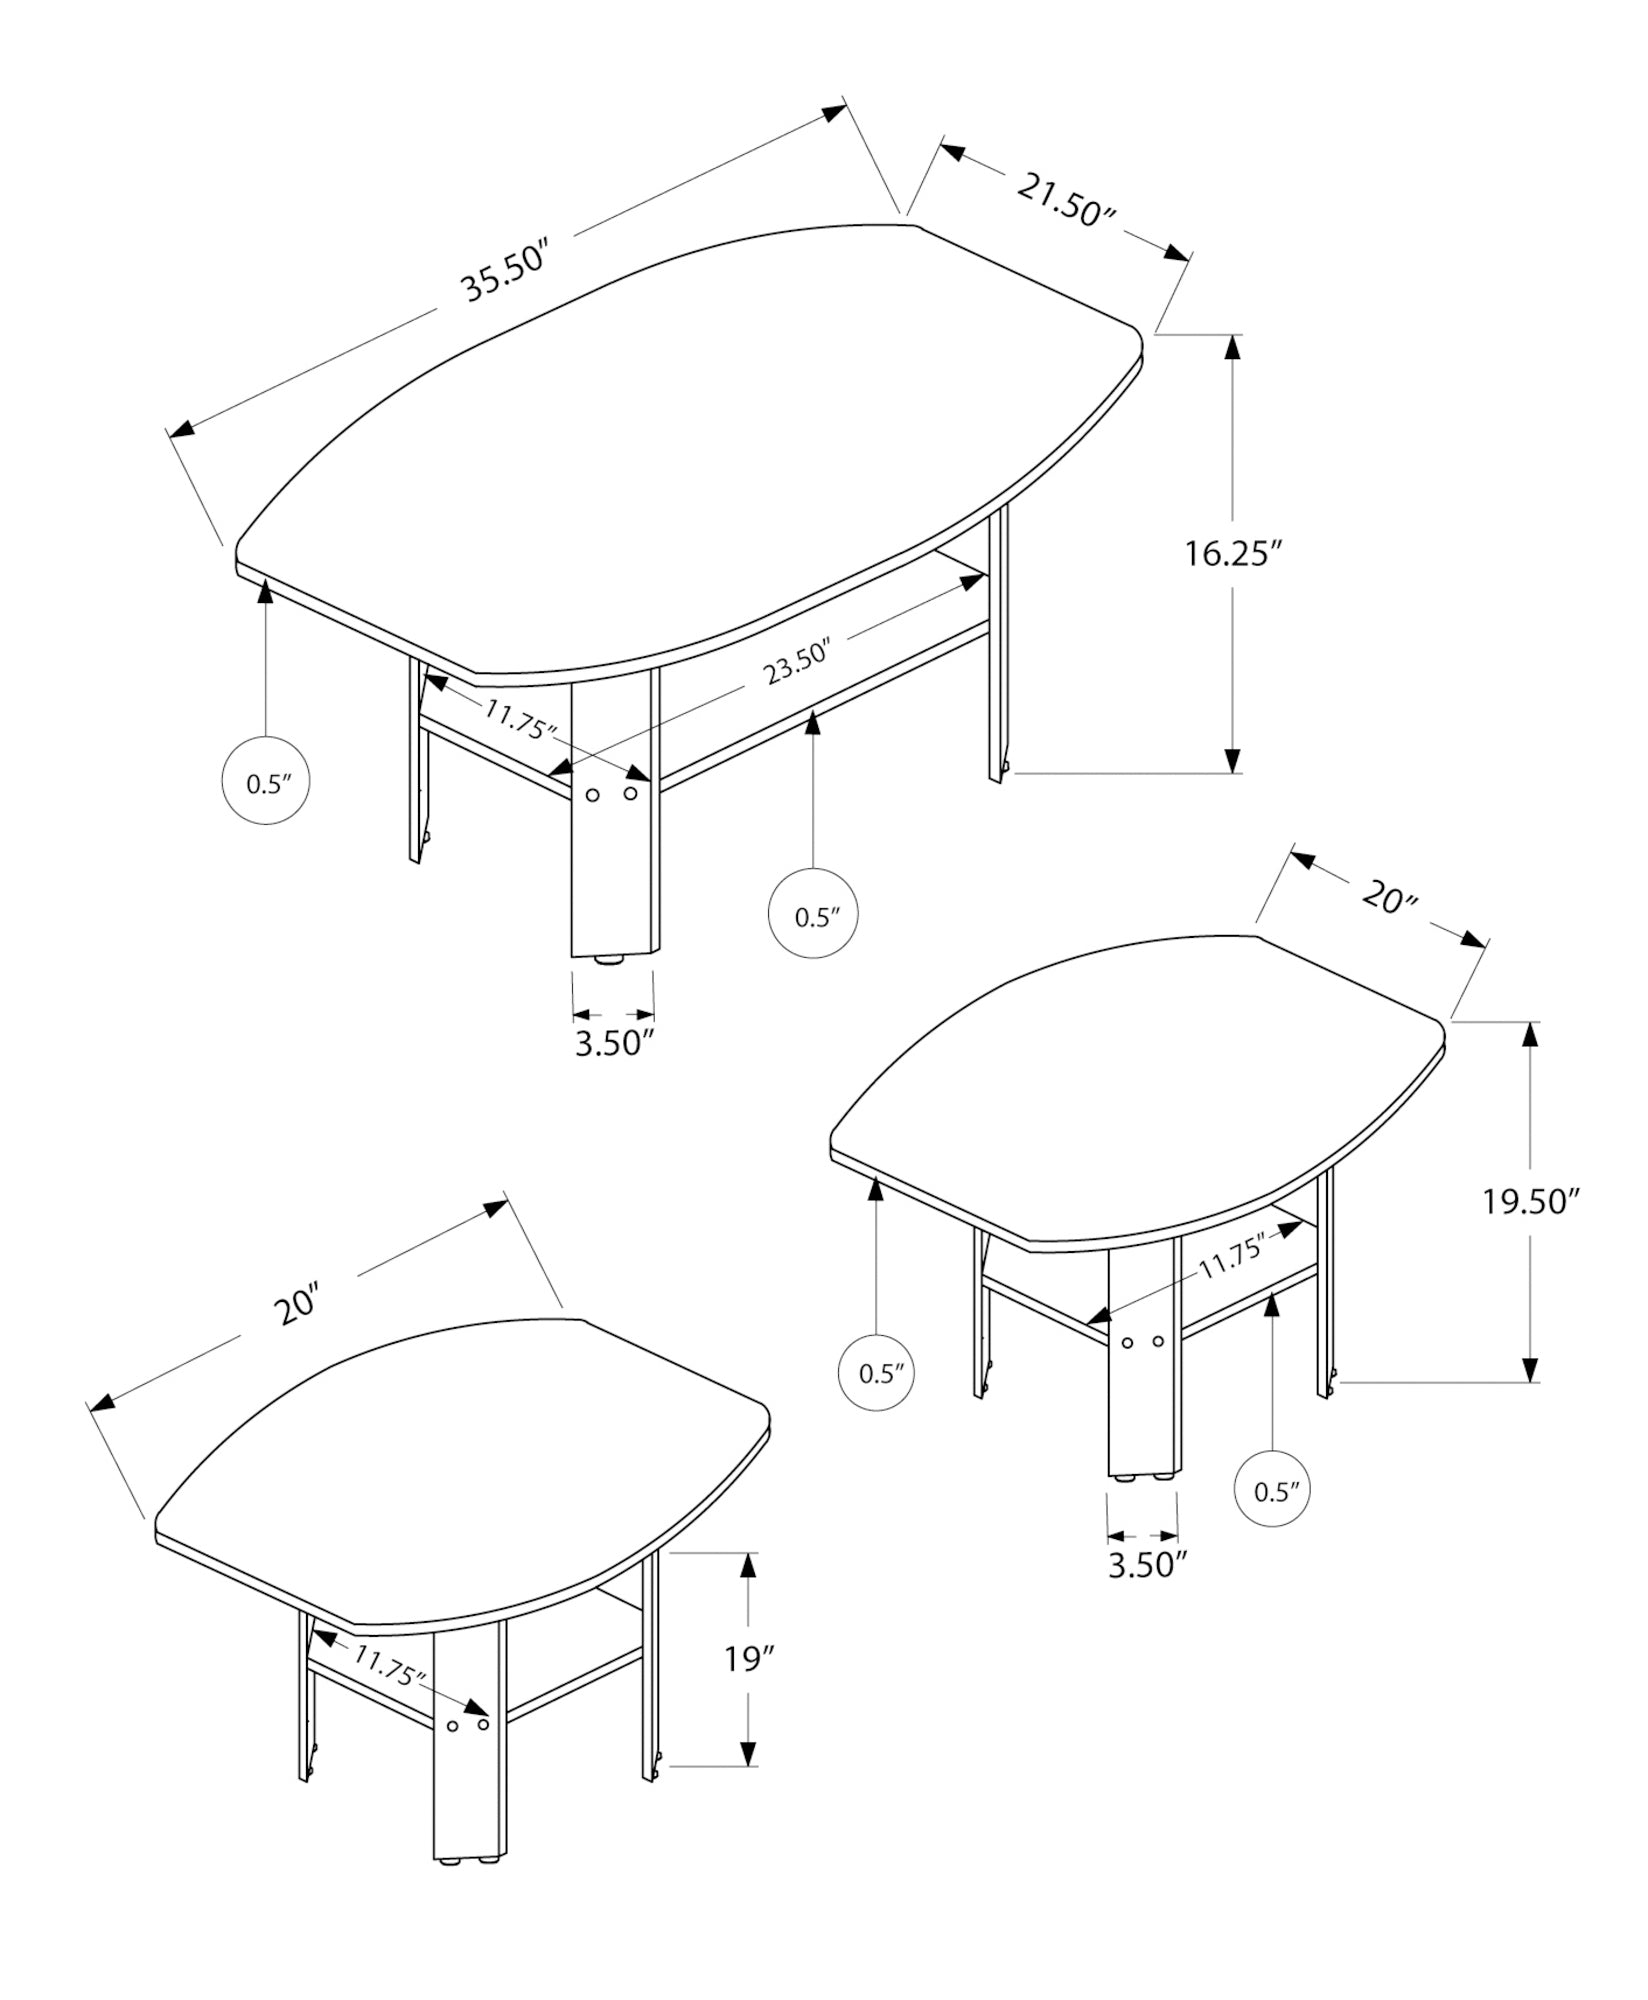 Table Set - 3Pcs Set / Black / Grey Top